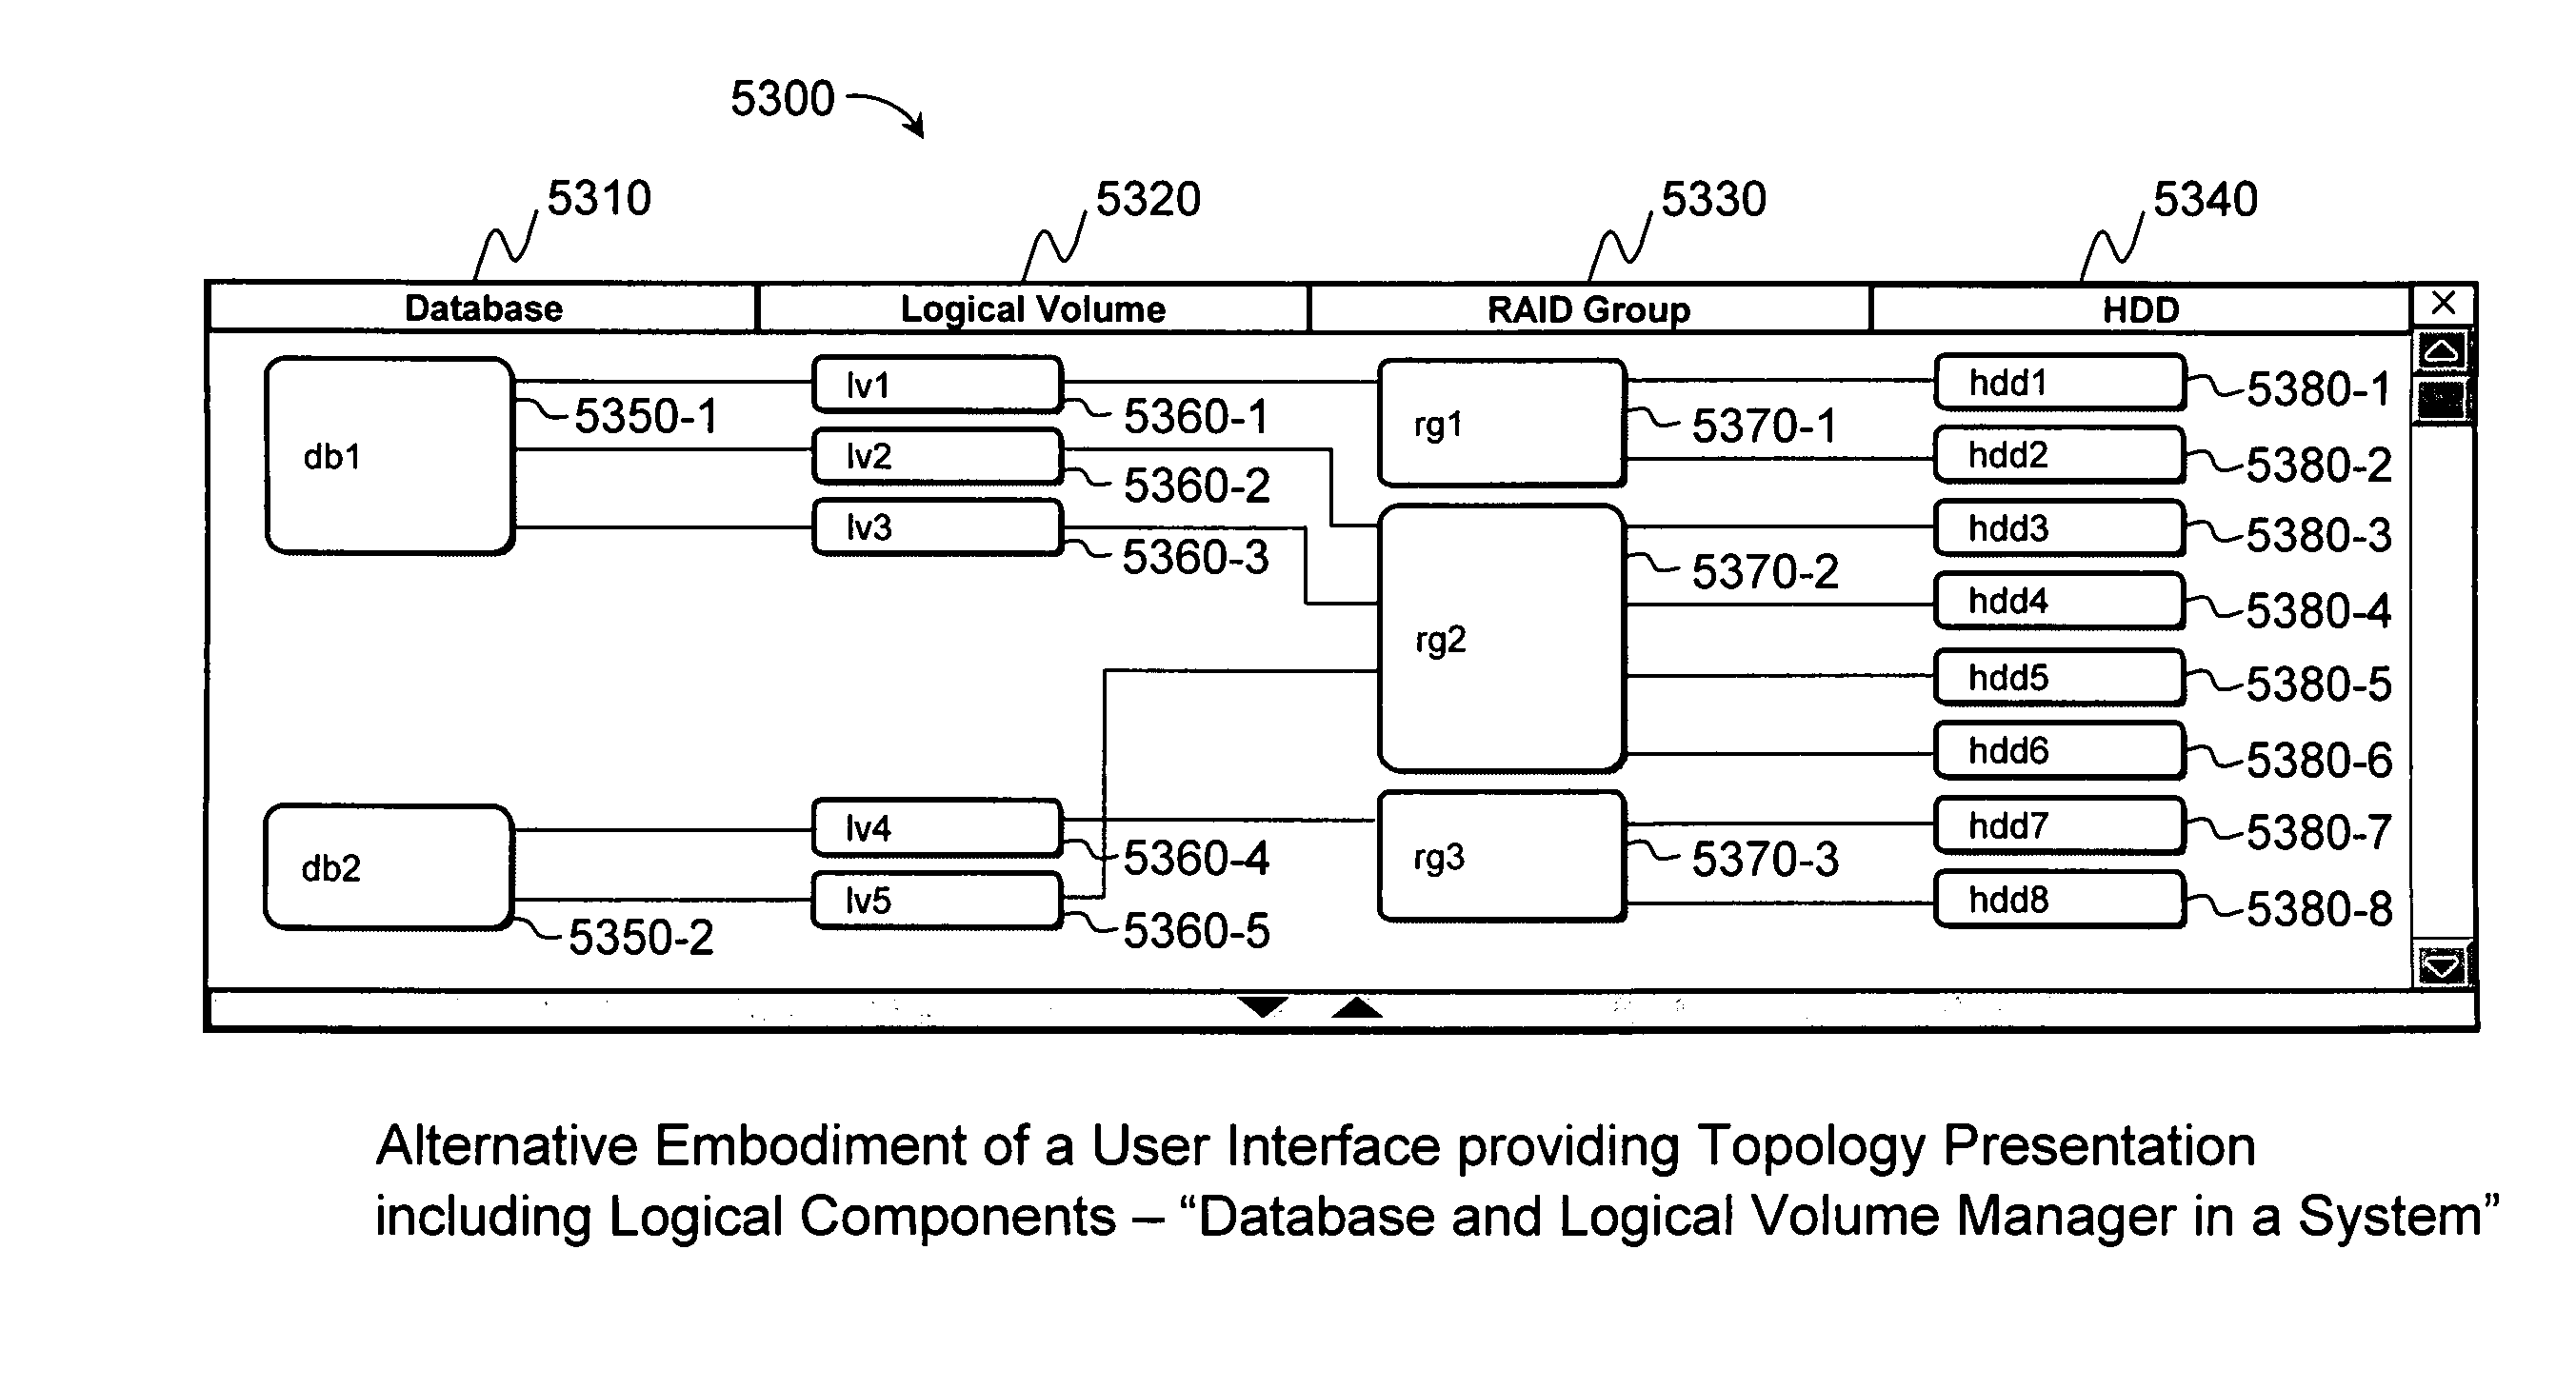 User interface providing information system topology presentation